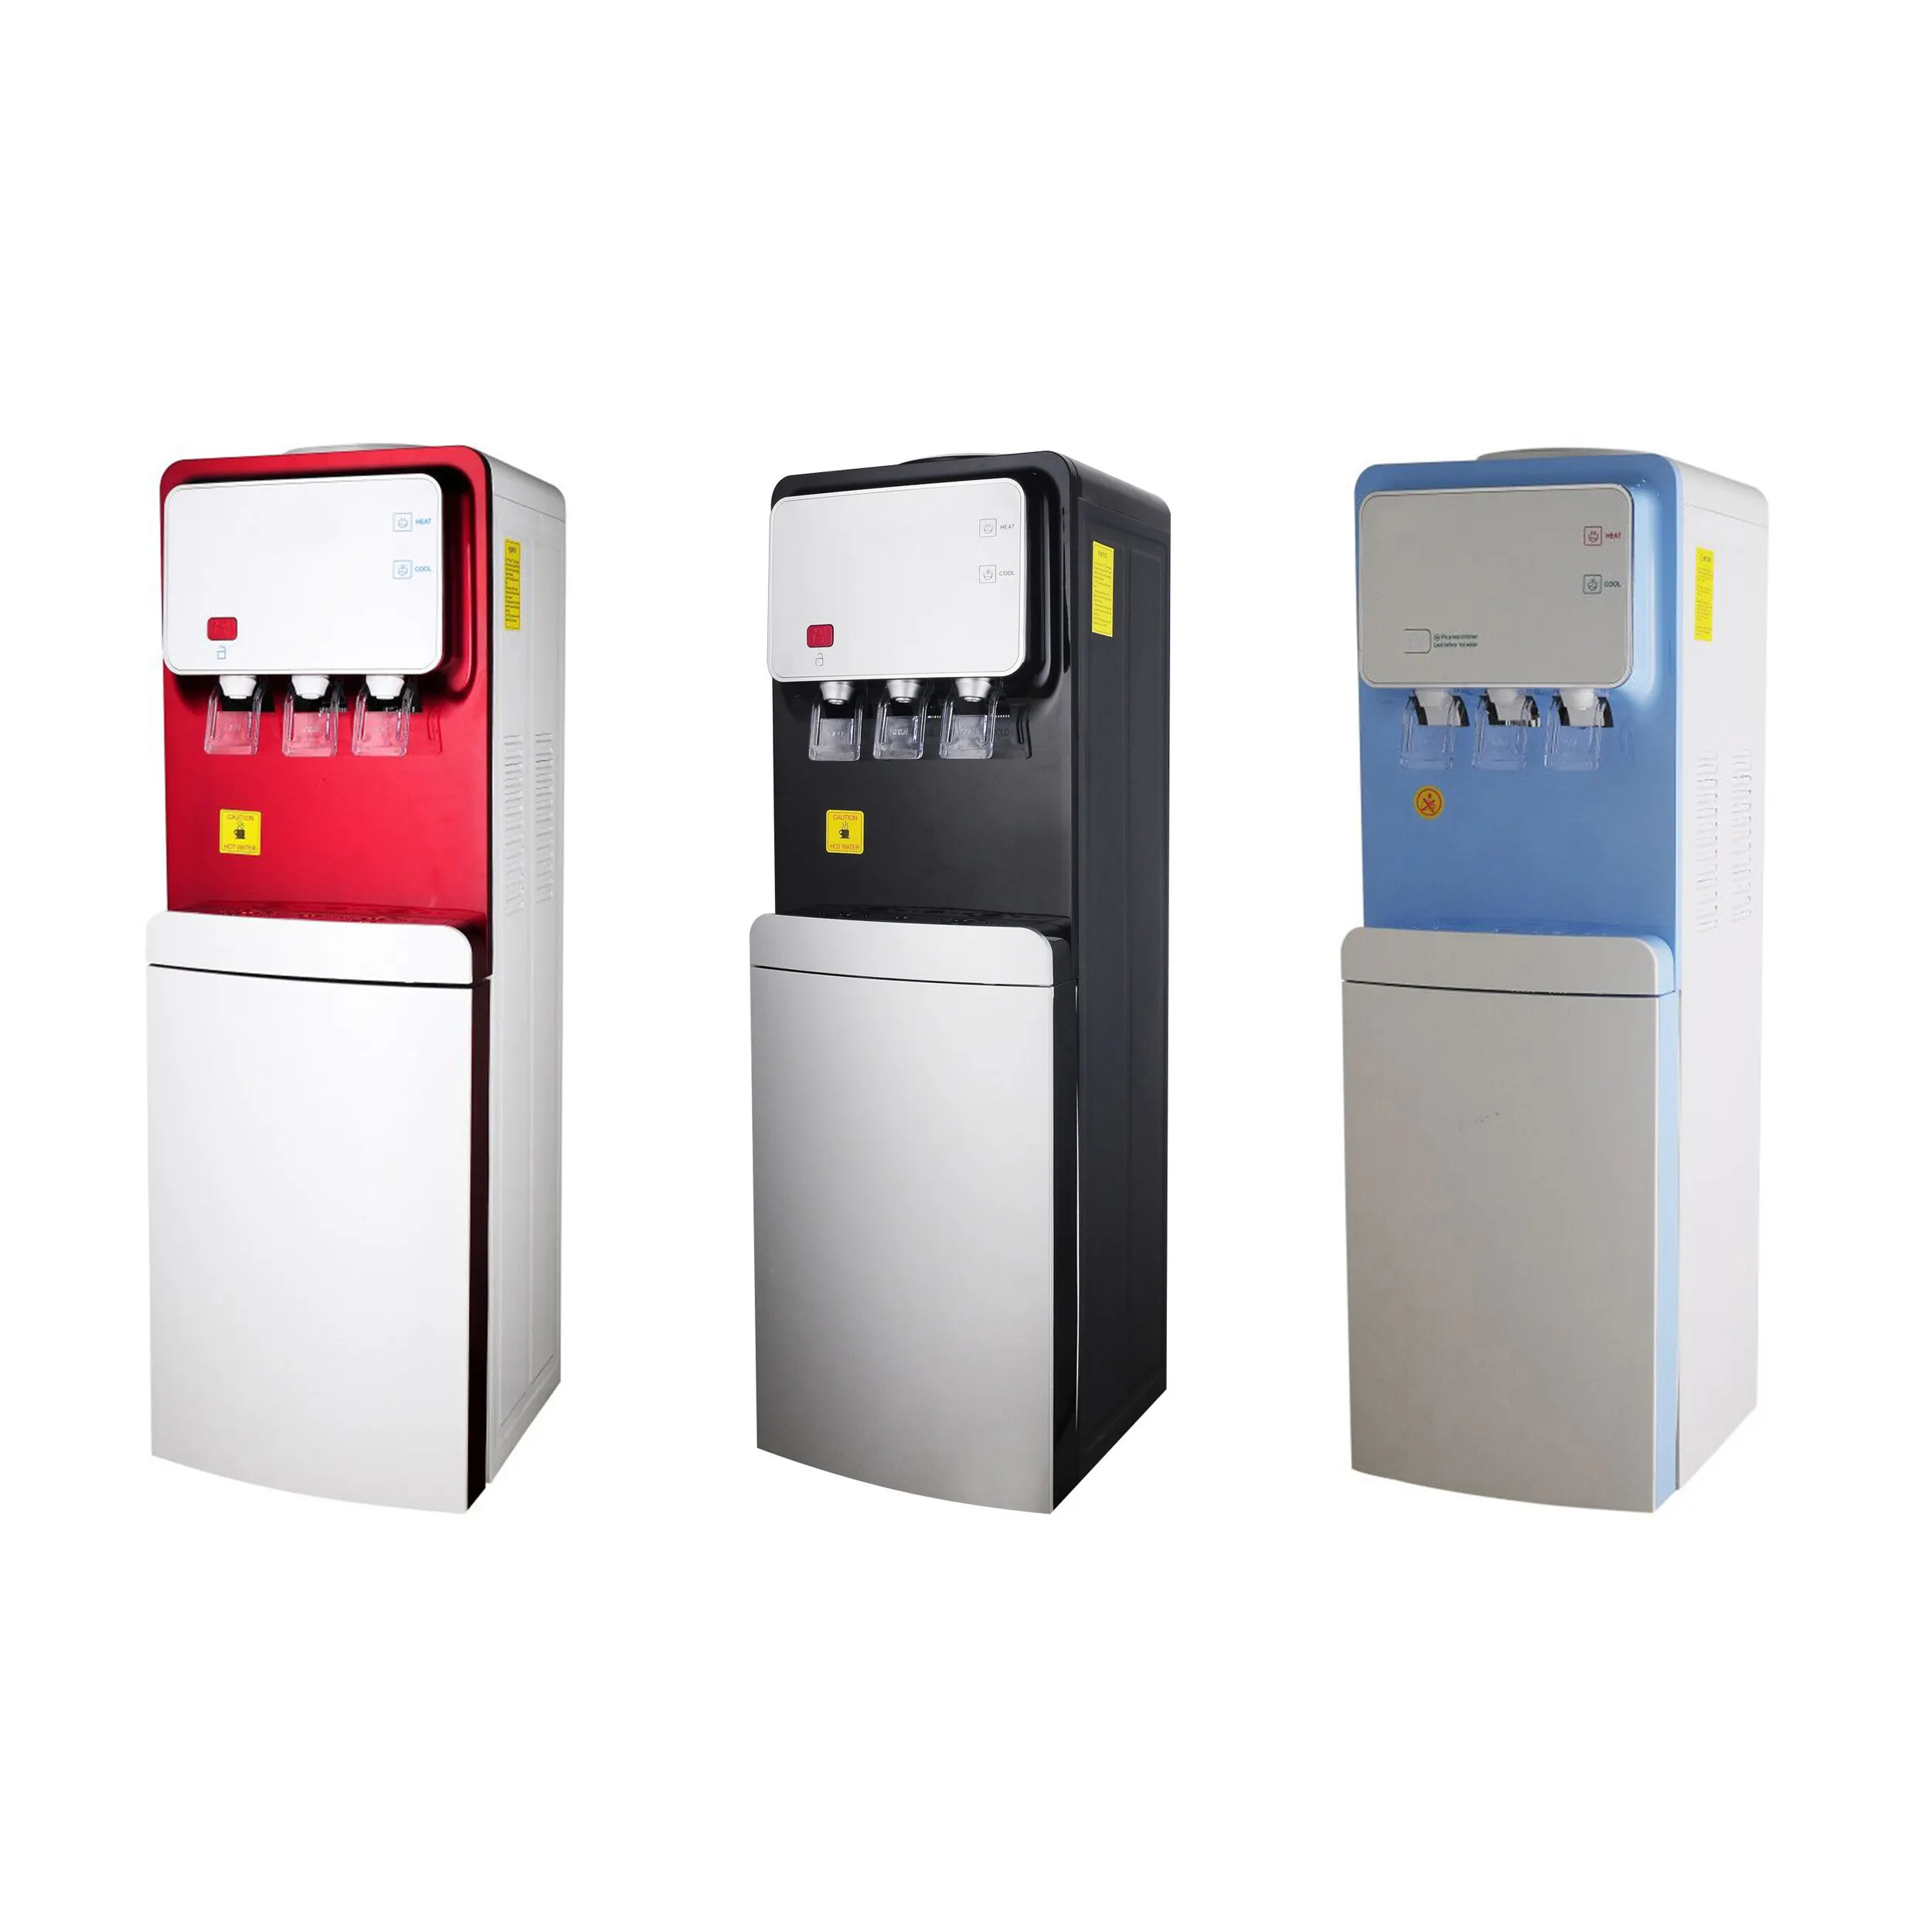 Floor standing hot and cold water dispenser/water cooler